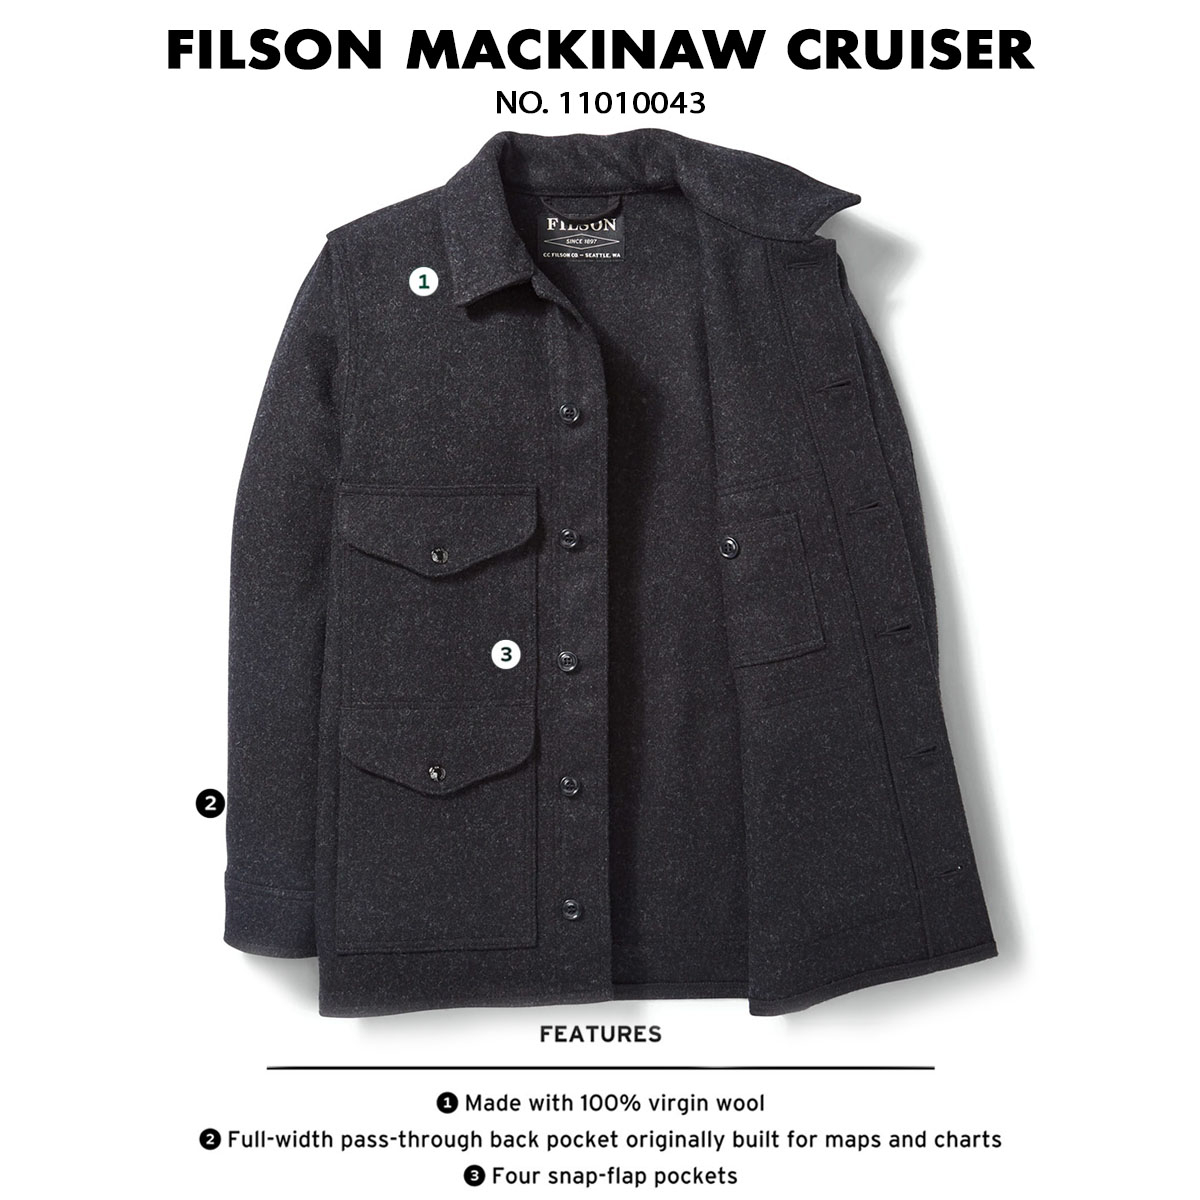 Filson Mackinaw Wool Cruiser Charcoal 11010043, features